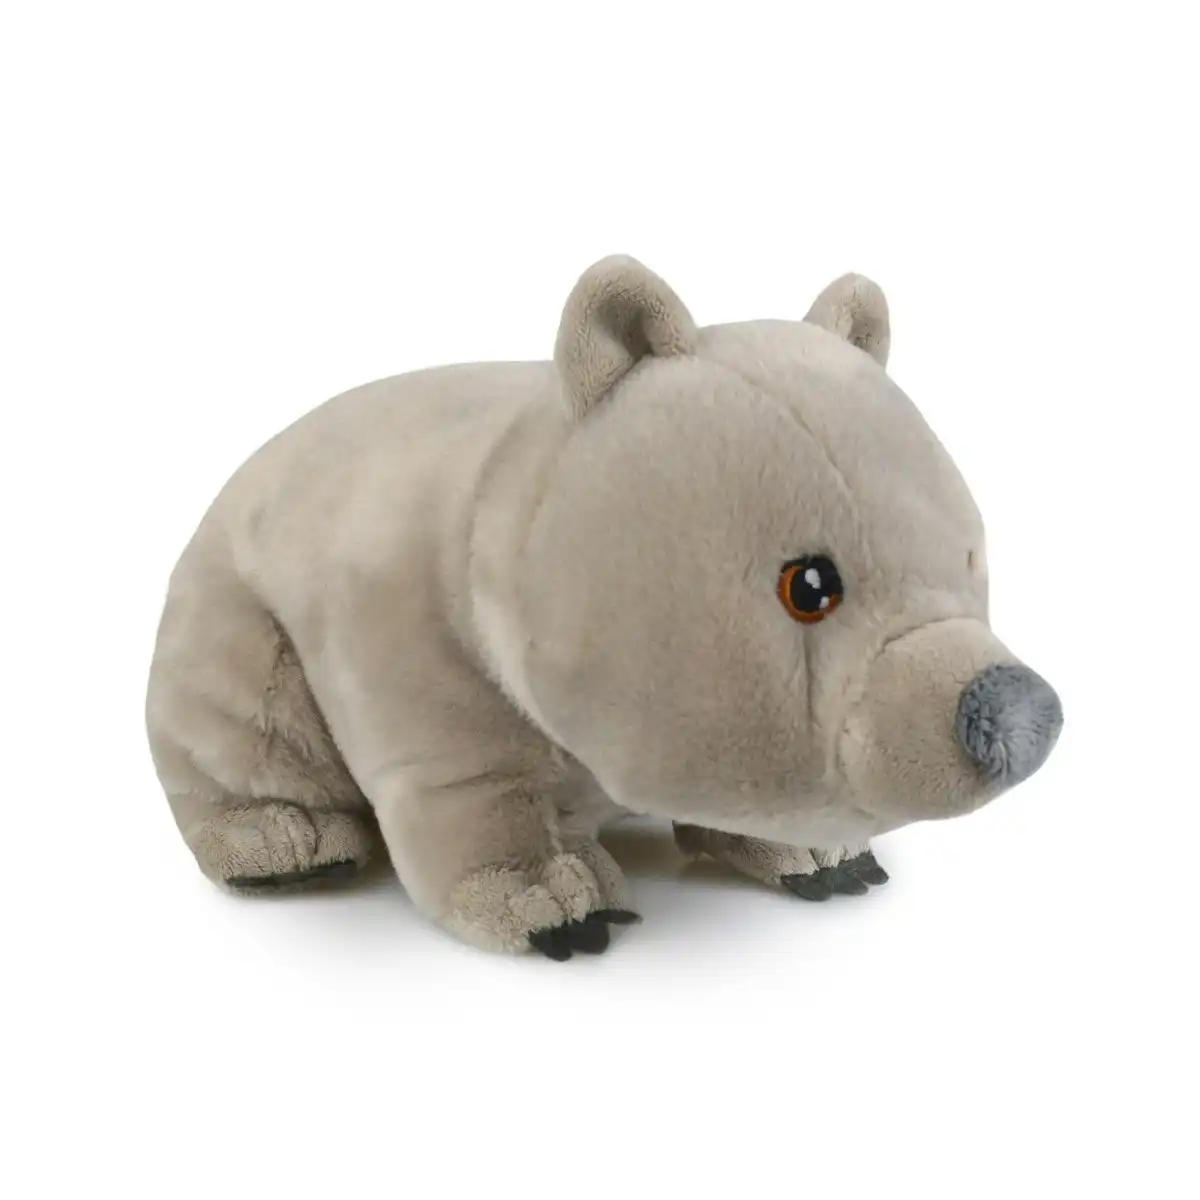 Keeleco Wombat Kids 25cm Souvenir/Gifts Soft Animal Plush Stuffed Toy Grey 3Y+